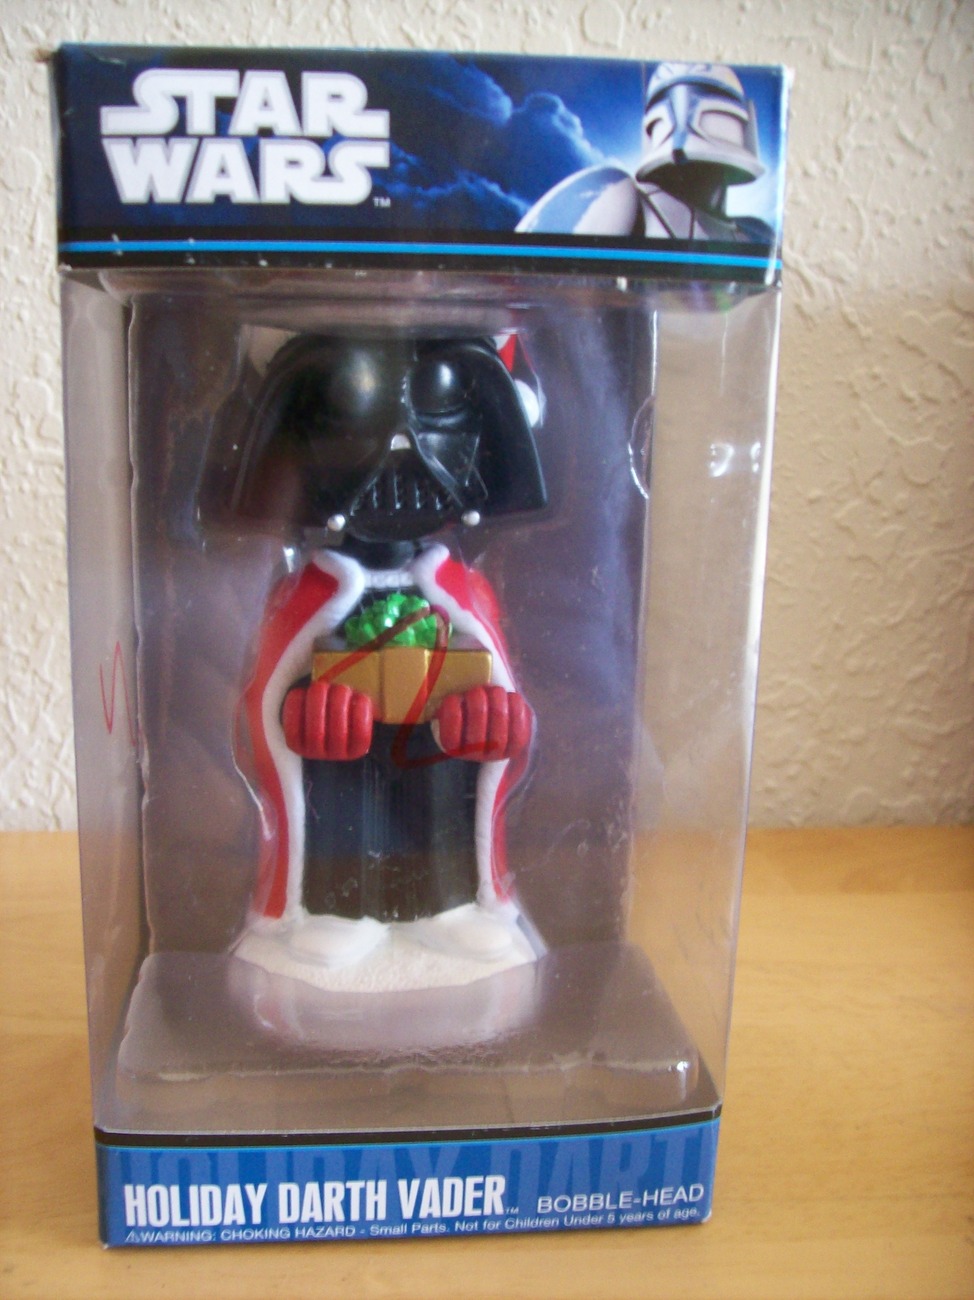 2010 Star Wars Holiday Darth Vader Bobble-Head Figurine - $15.00